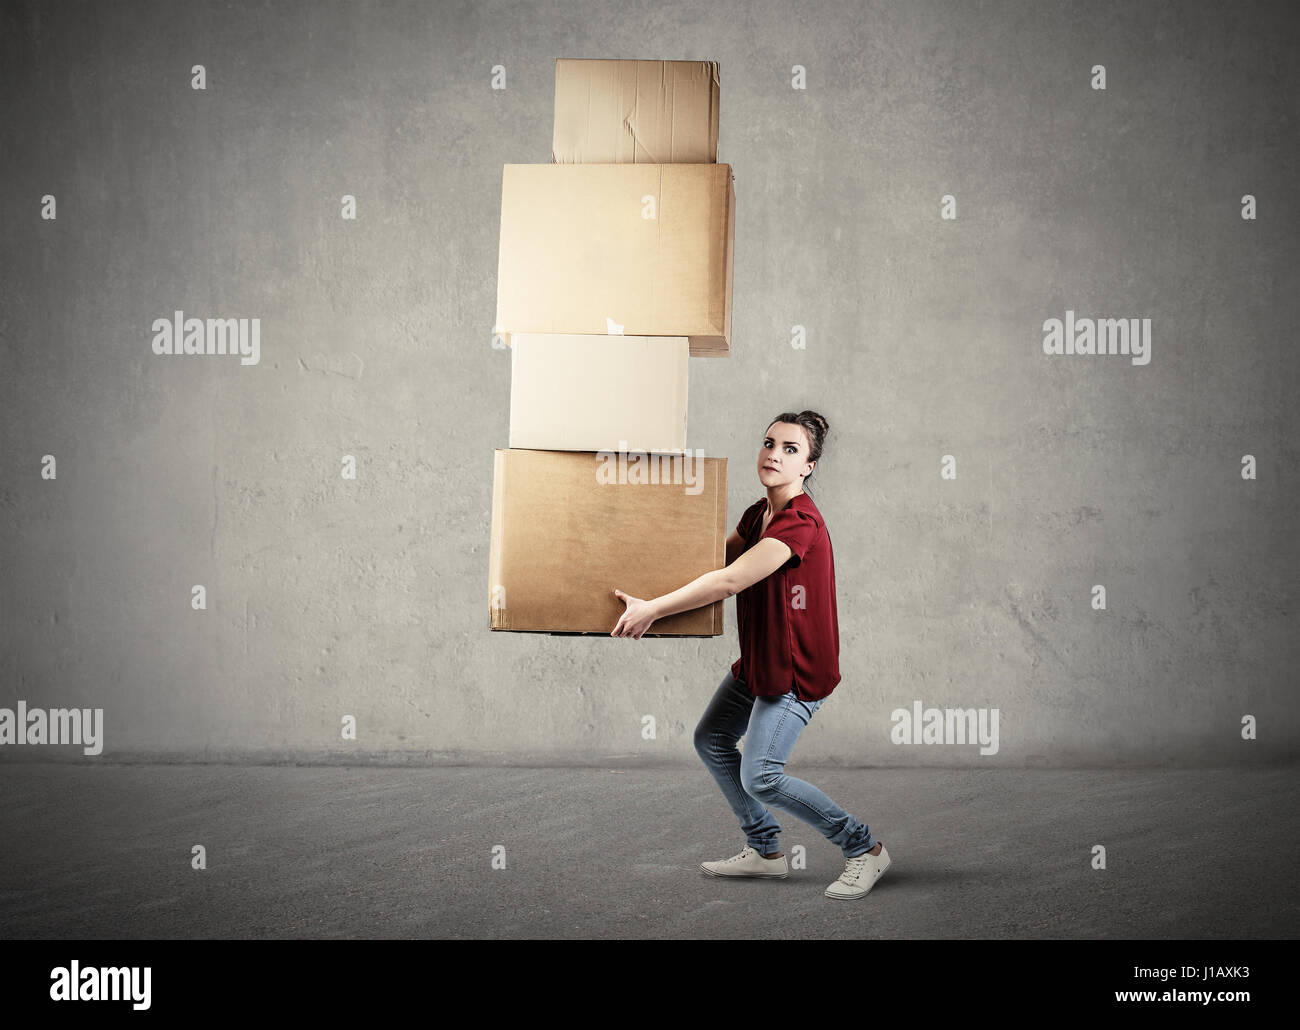 https://c8.alamy.com/comp/J1AXK3/woman-carrying-heavy-boxes-J1AXK3.jpg